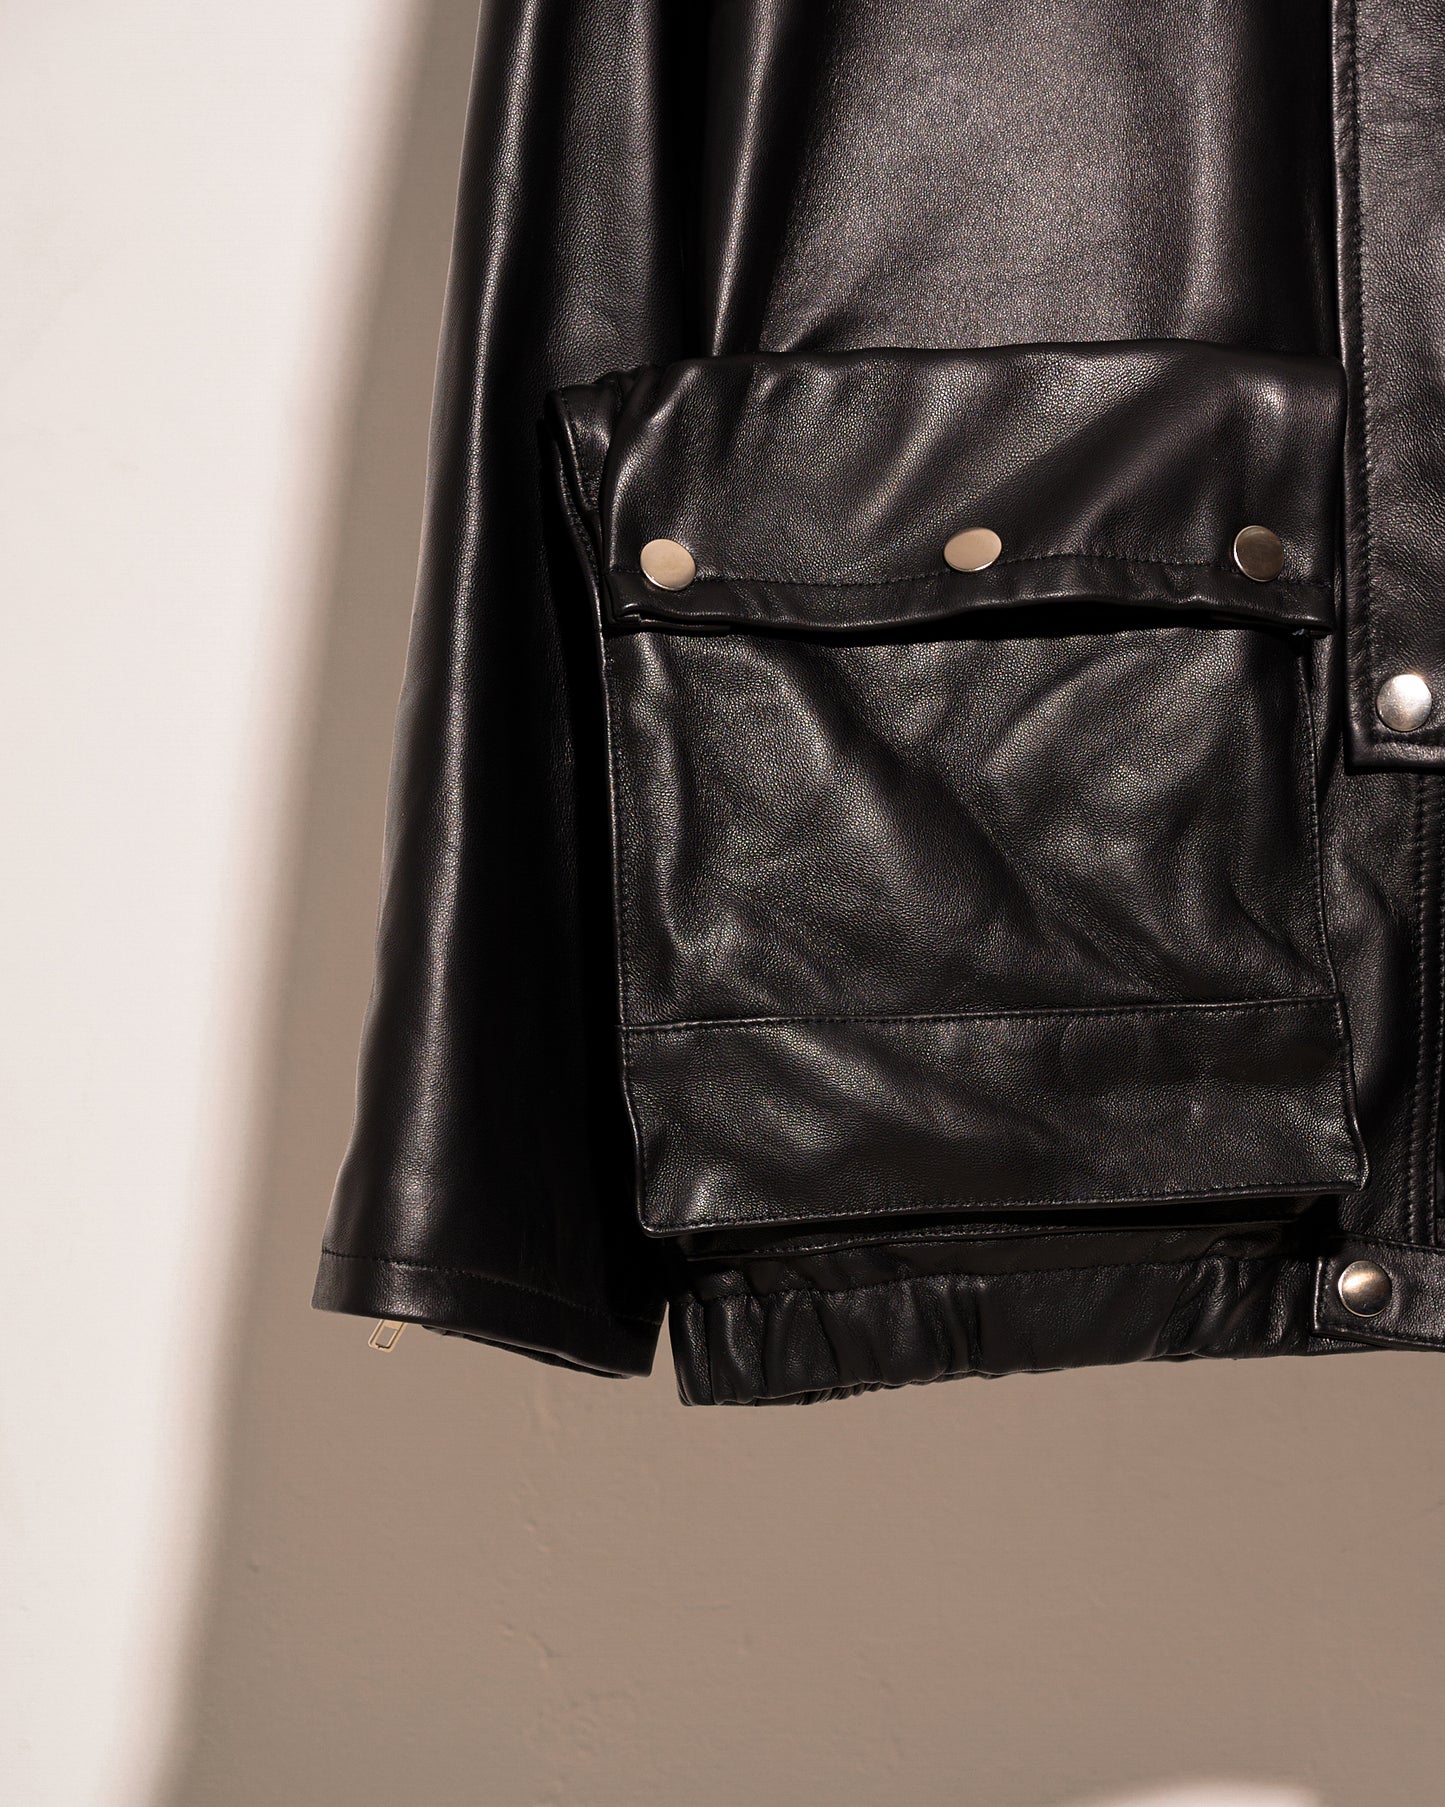 (Pre-order) aalis BROOK pocket leather jacket (6 colours)